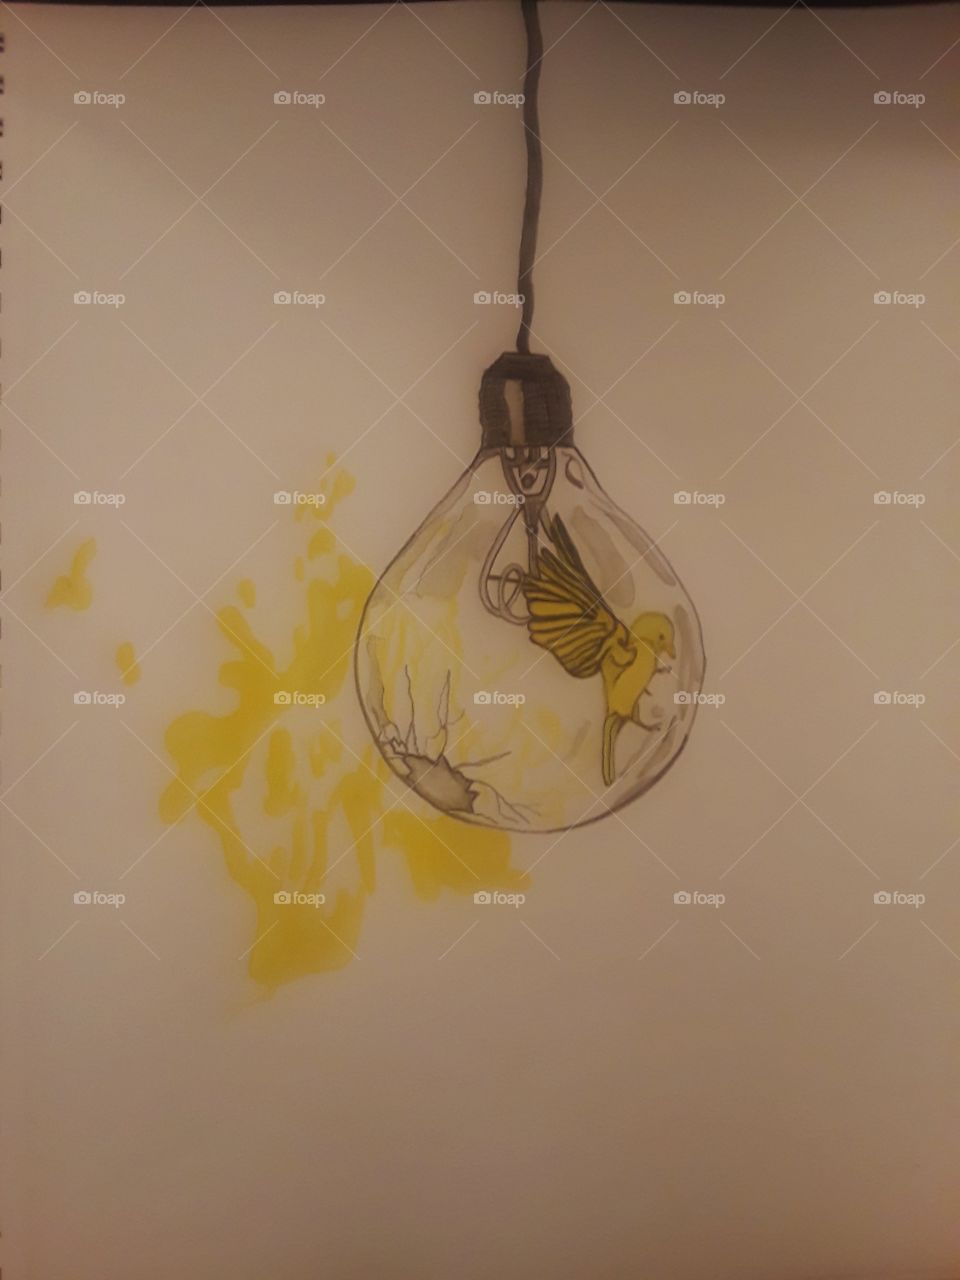 water paint lightbulb with bird inside